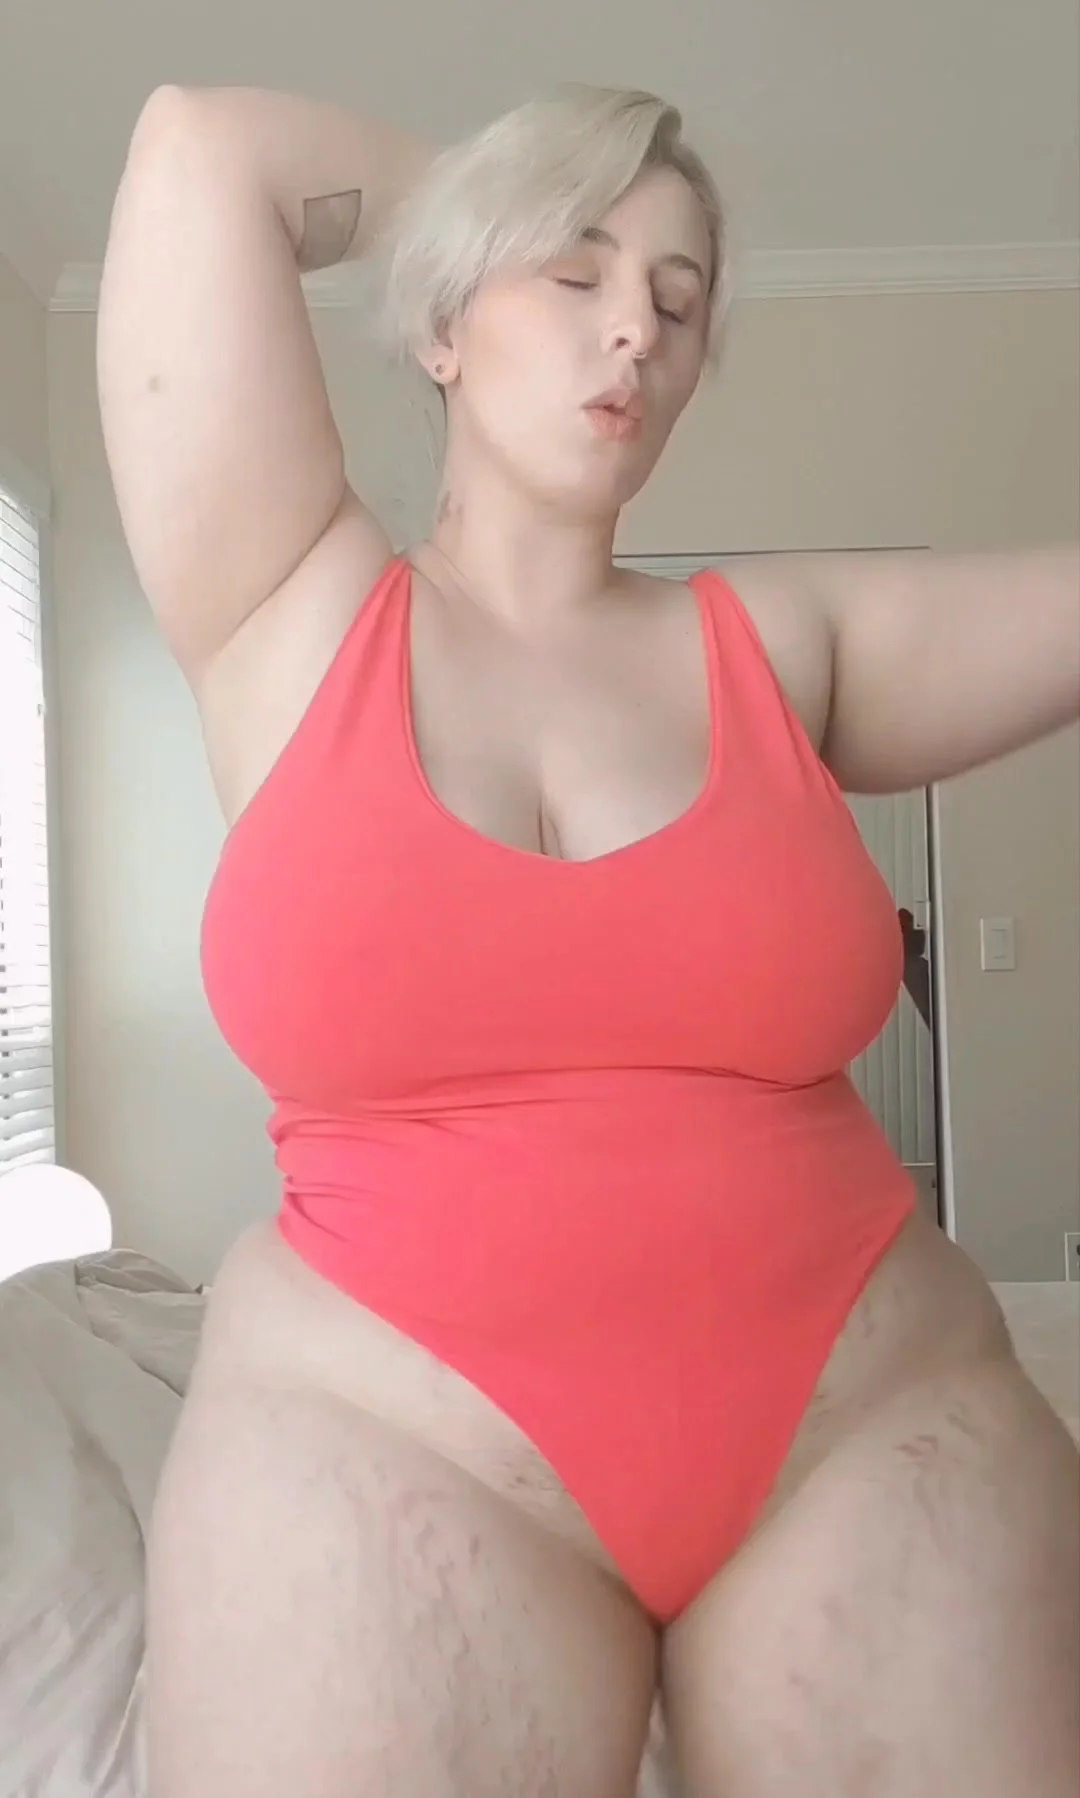 Chubby Slut Porn - Sexy chubby slut - video 2 - ThisVid.com